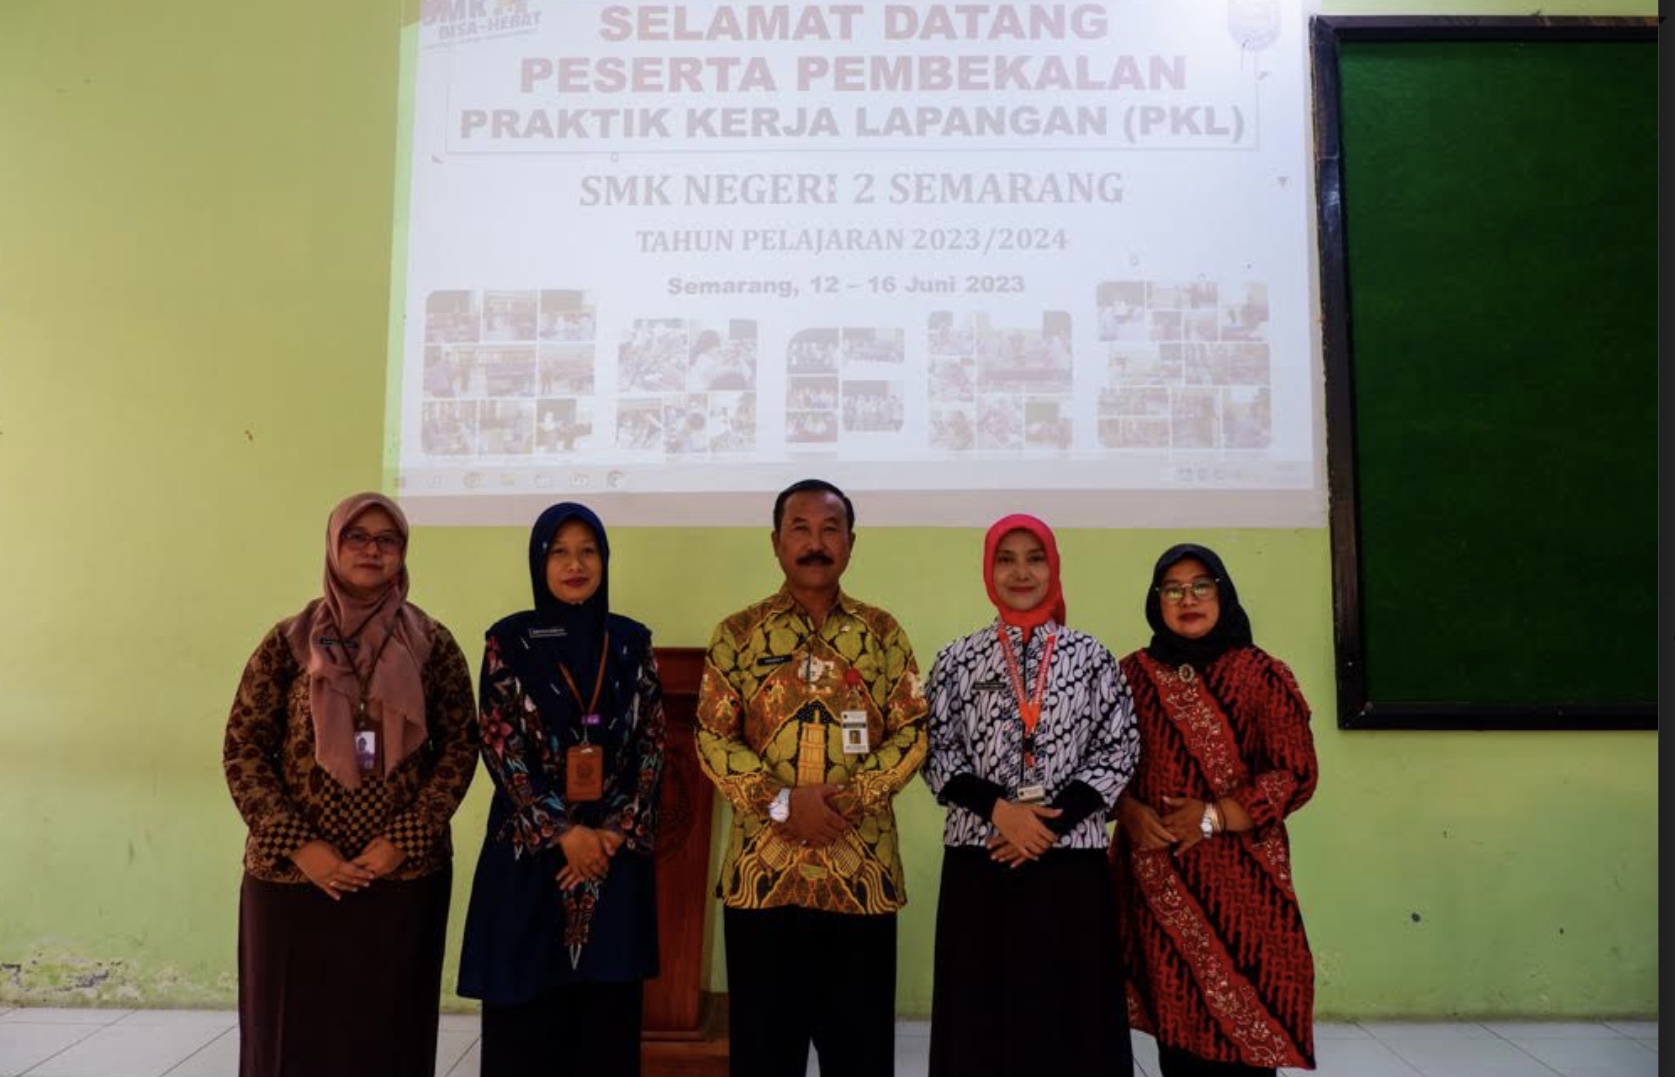 Kegiatan Pembekalan Praktik Kerja Lapangan (PKL) SMKN 2 Semarang